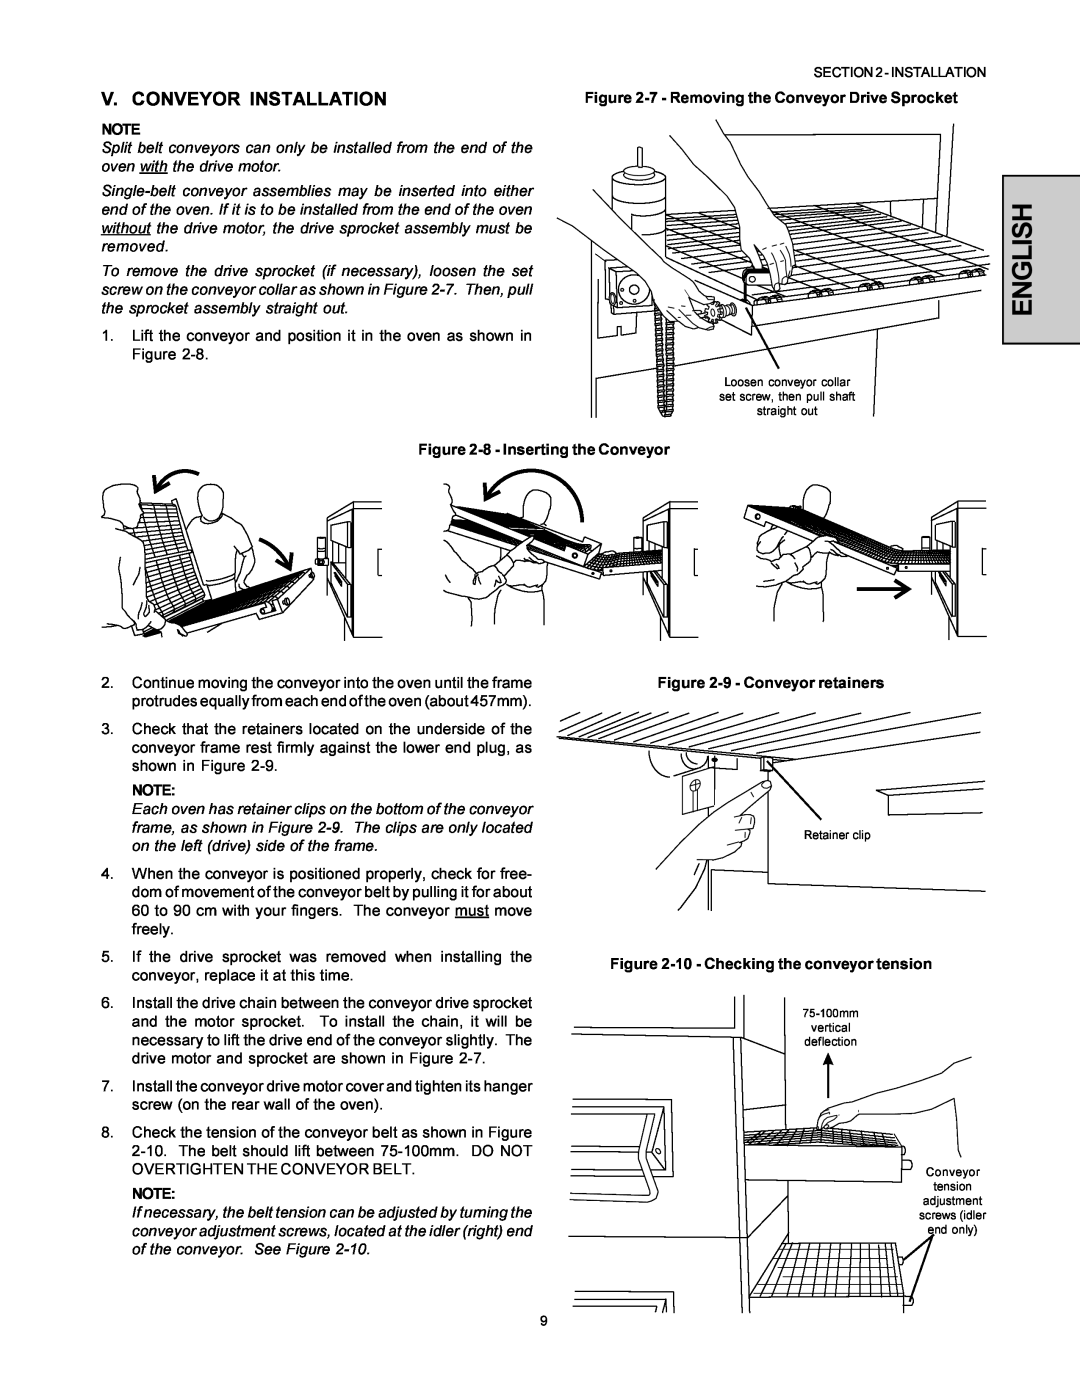 Middleby Marshall PS360-U installation manual English, V. Conveyor Installation, 7- Removing the Conveyor Drive Sprocket 